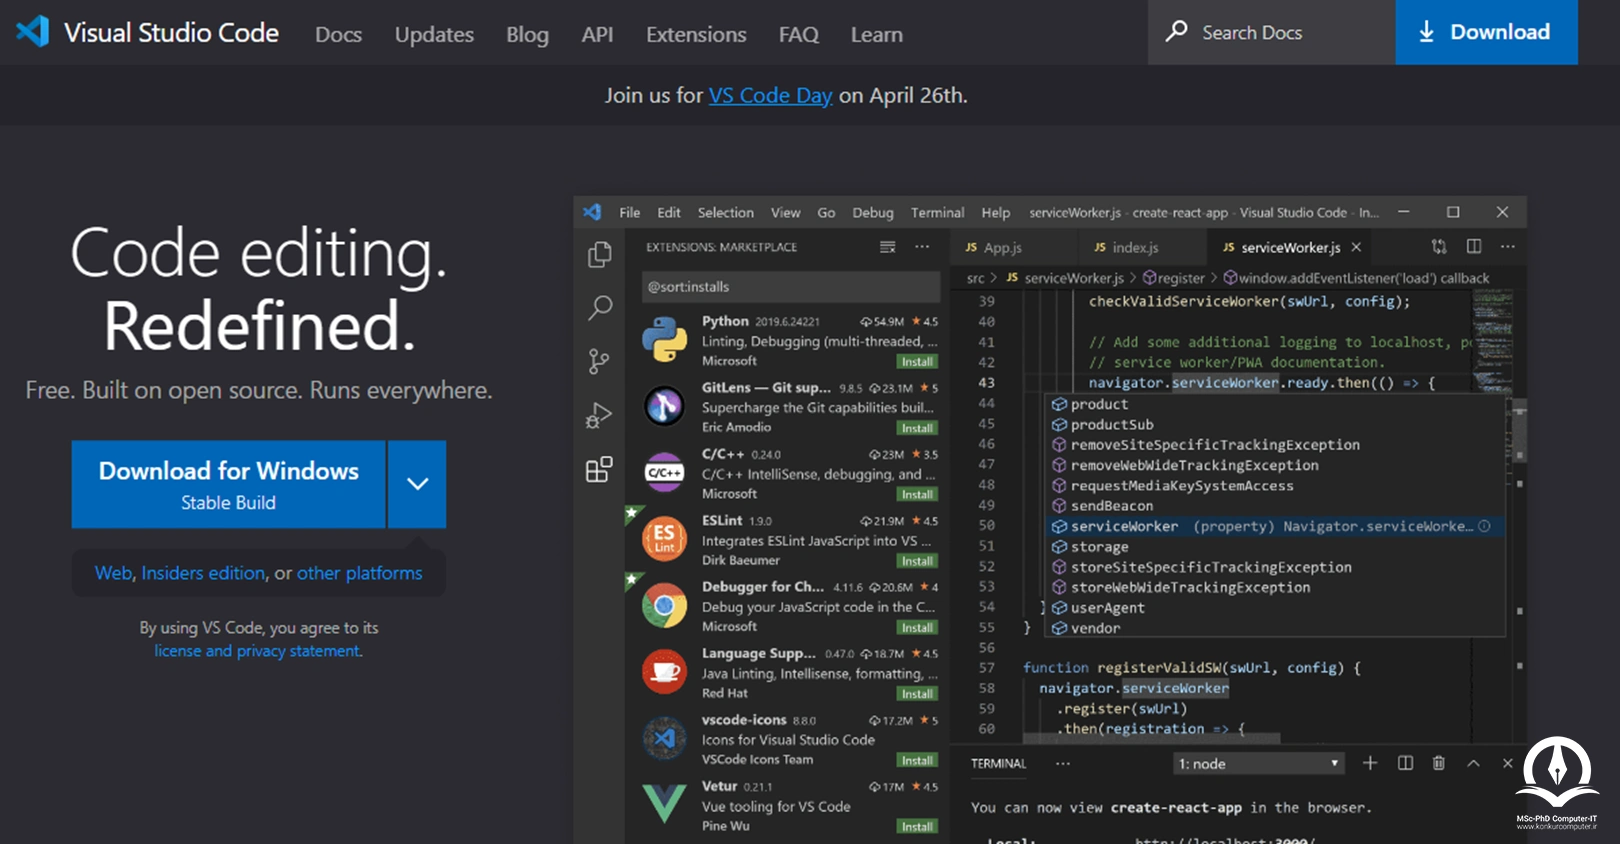 وبسایت رسمی ادیتور کد Visual Studio Code